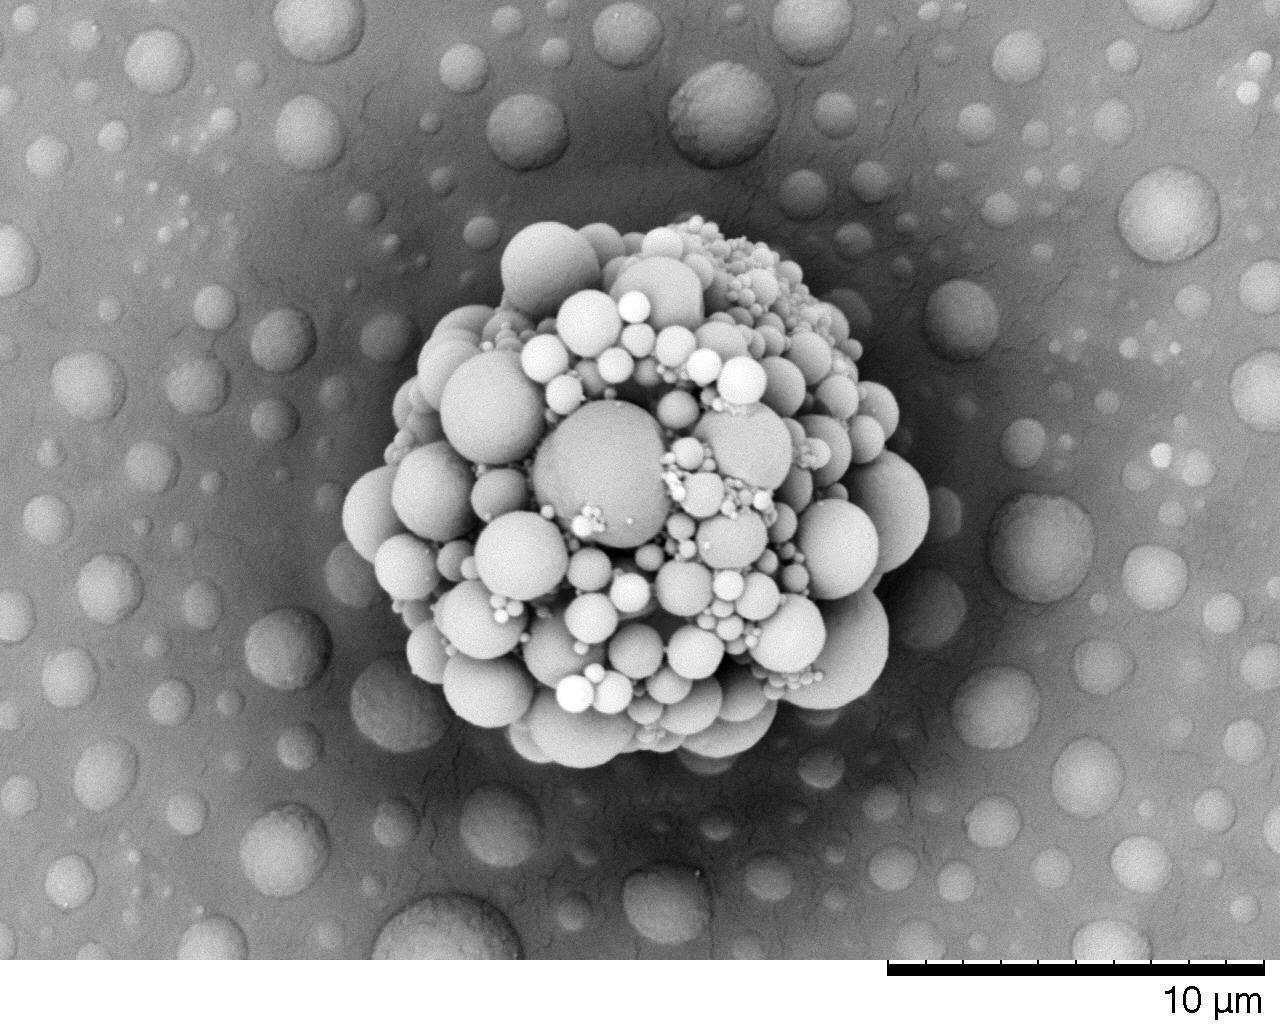 Foto ganadora: "SEM micrograph showing multiscale roughness" by Ms. Ana B. LópezSEM micrograph showing multiscale roughness